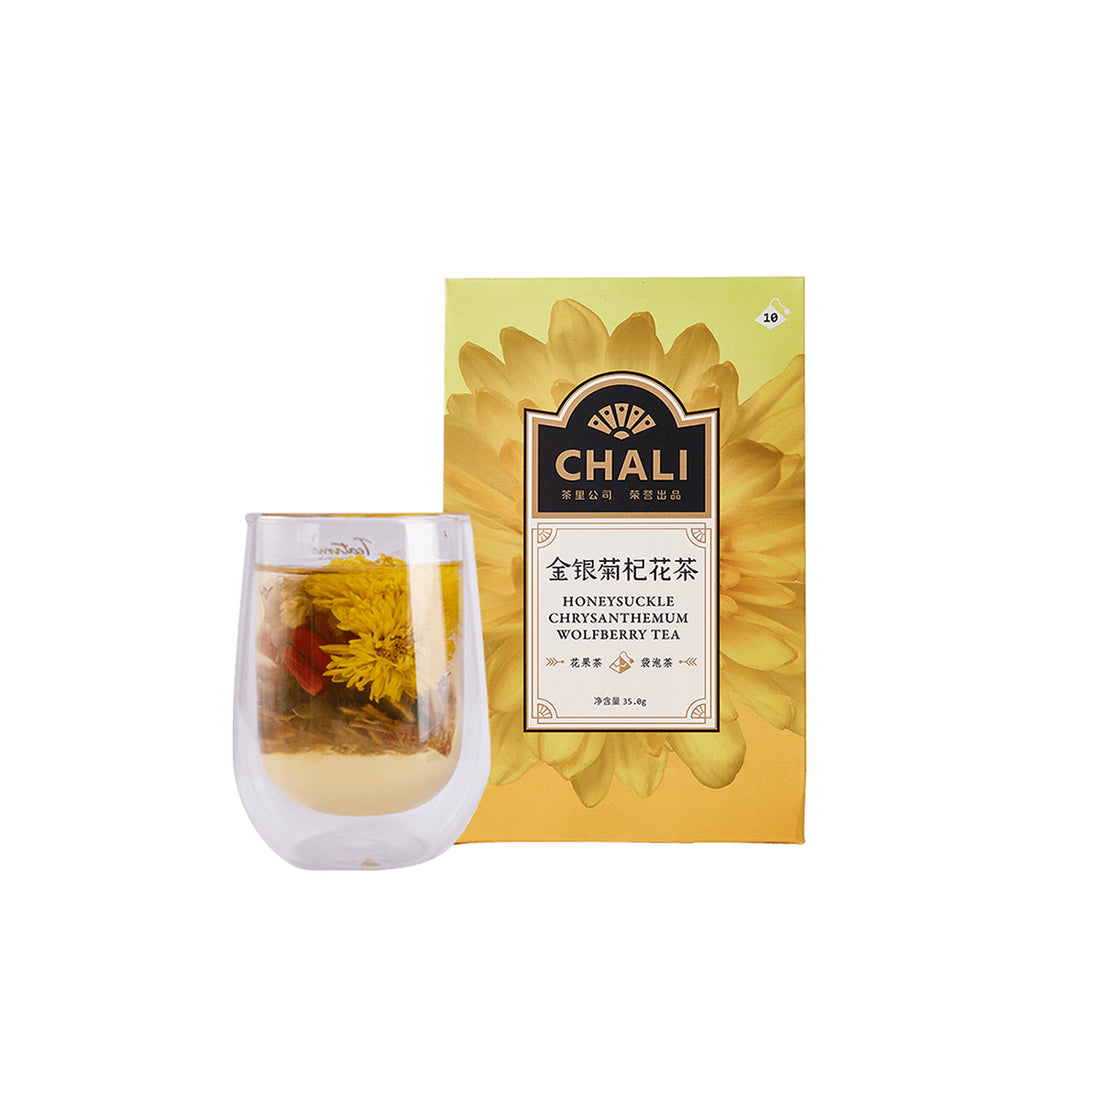 Honeysuckle Chrysanthemum Wolfberry Tea 35g (10 Tea Bags)